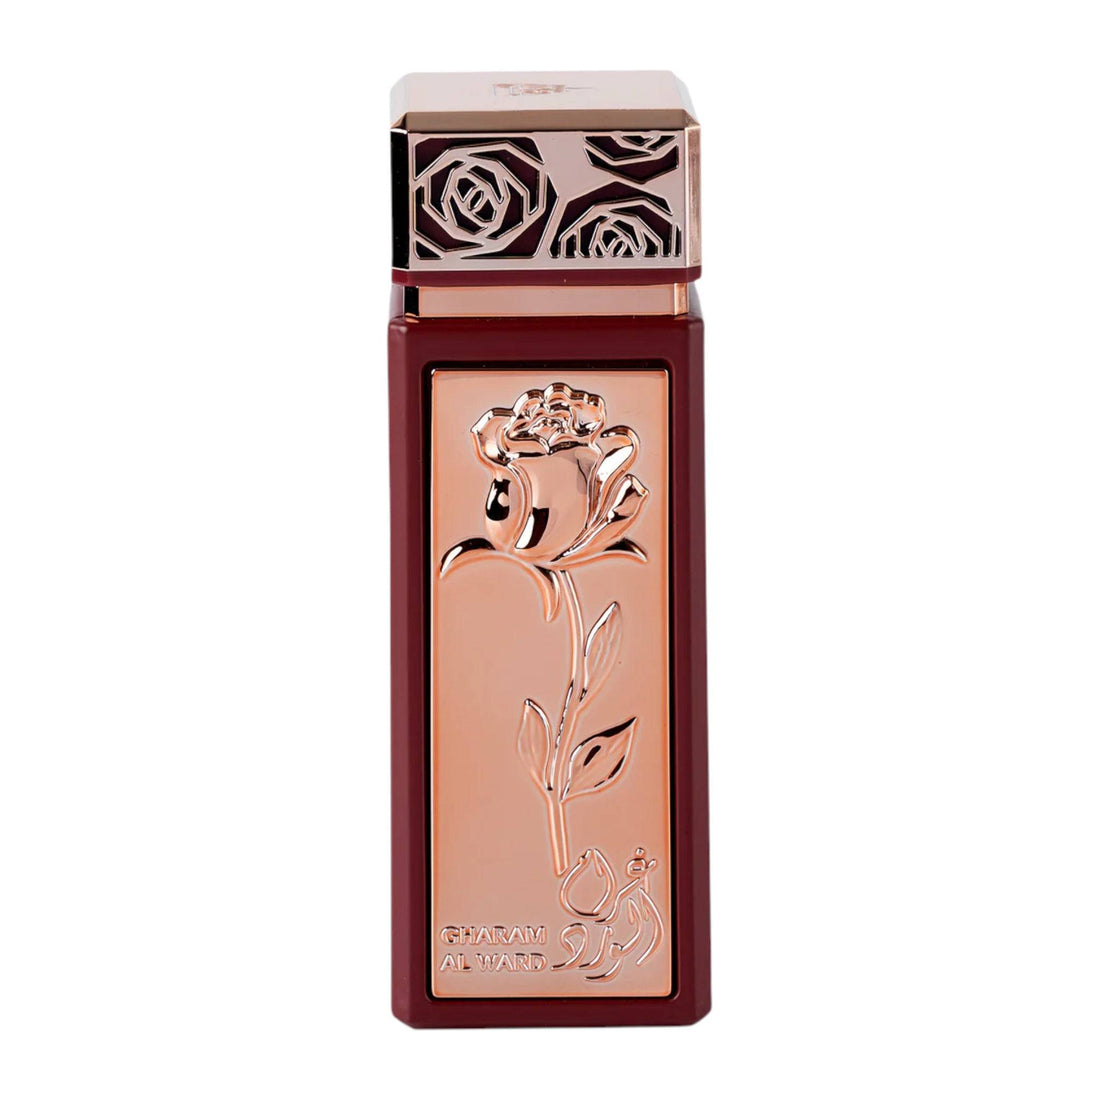 Elegant 100ml bottle of Bait Al Bakhoor Gharam Al Ward Eau De Parfum, embodying the luxurious and royal essence of the damascene rose.